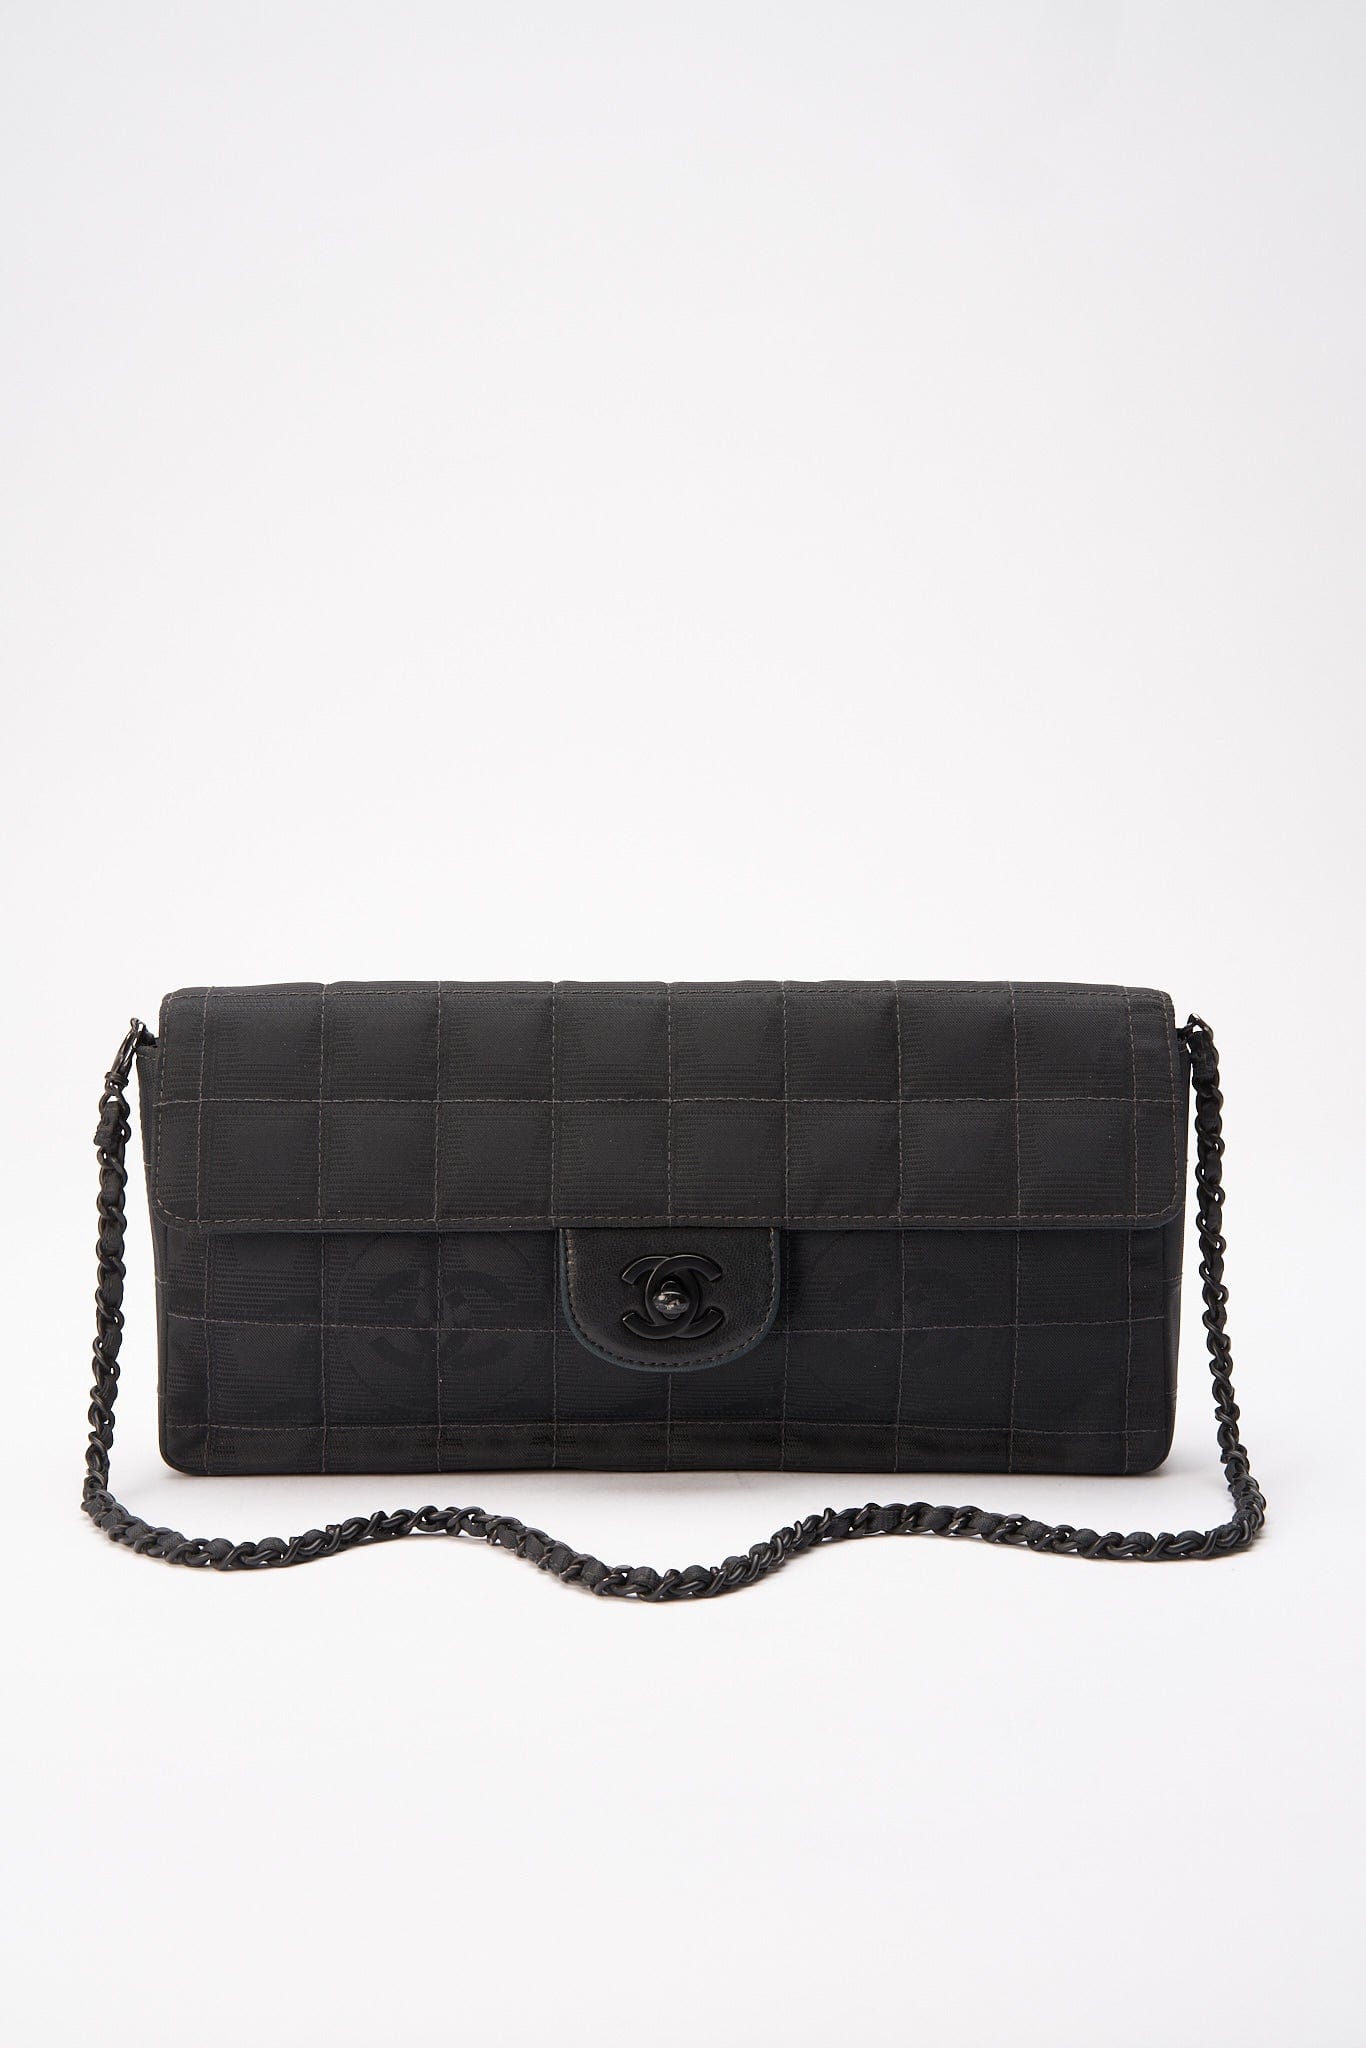 Chanel Black Nylon Travel Line Chocolate Bar Flap Bag – The Hosta